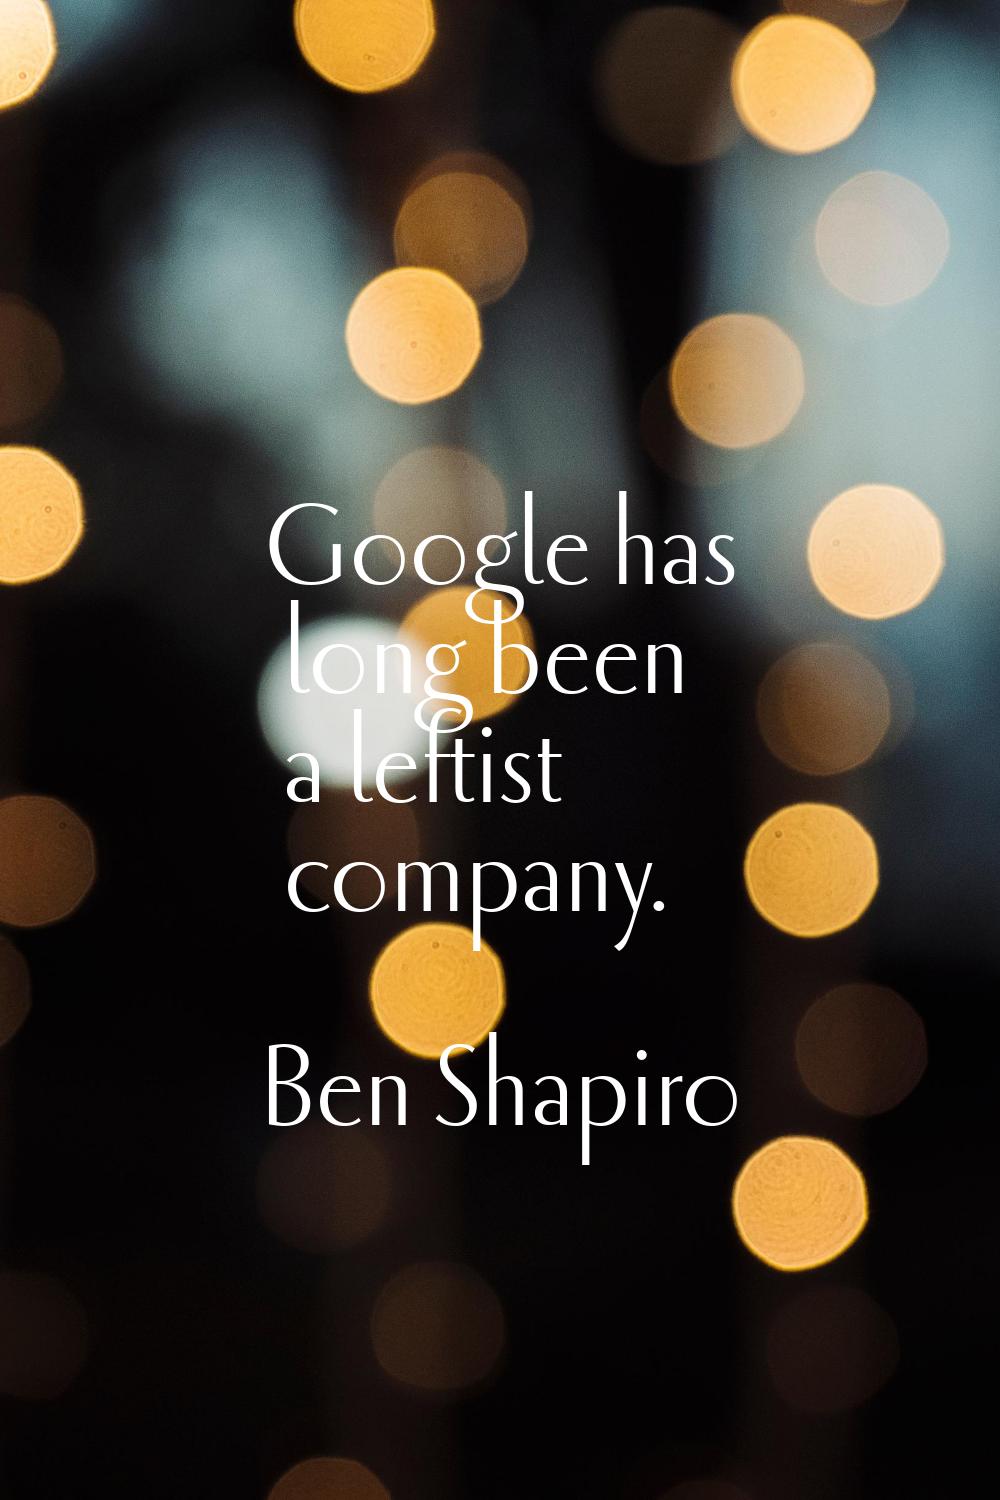 Google has long been a leftist company.